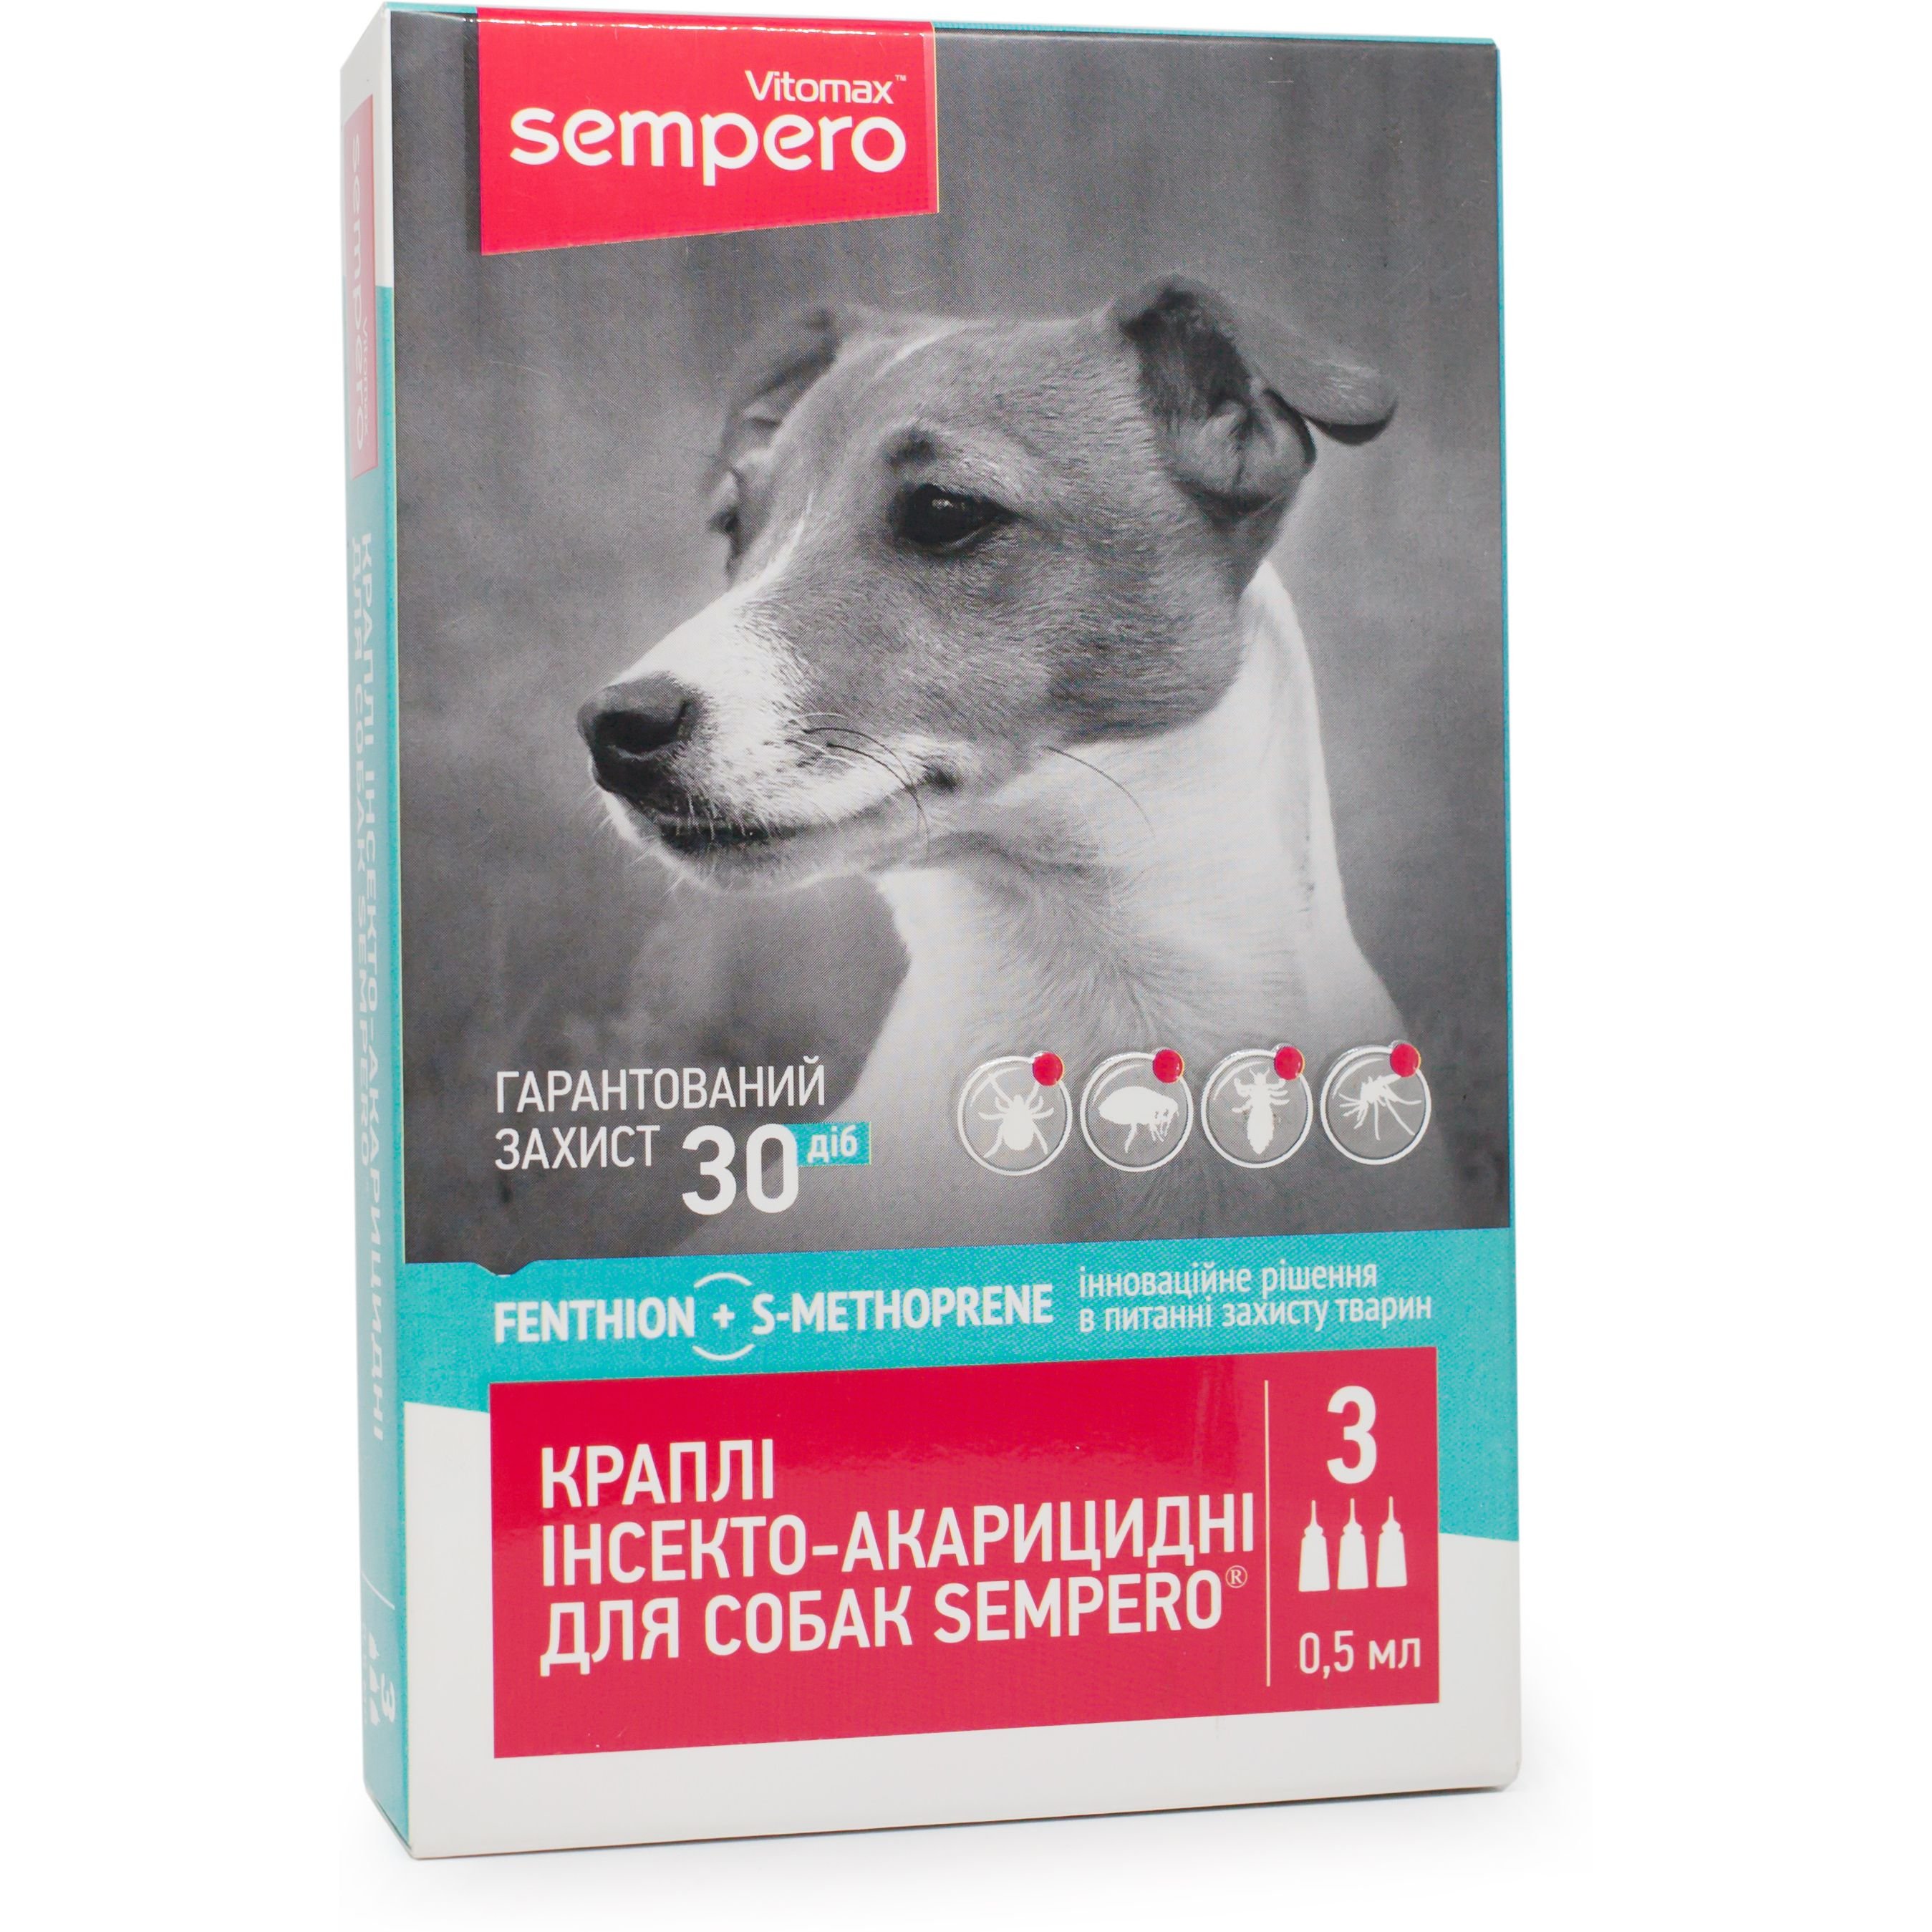 Капли на холку Vitomax Sempero противопаразитарные для собак 3-25 кг, 0.5 мл, 3 пипетки - фото 1